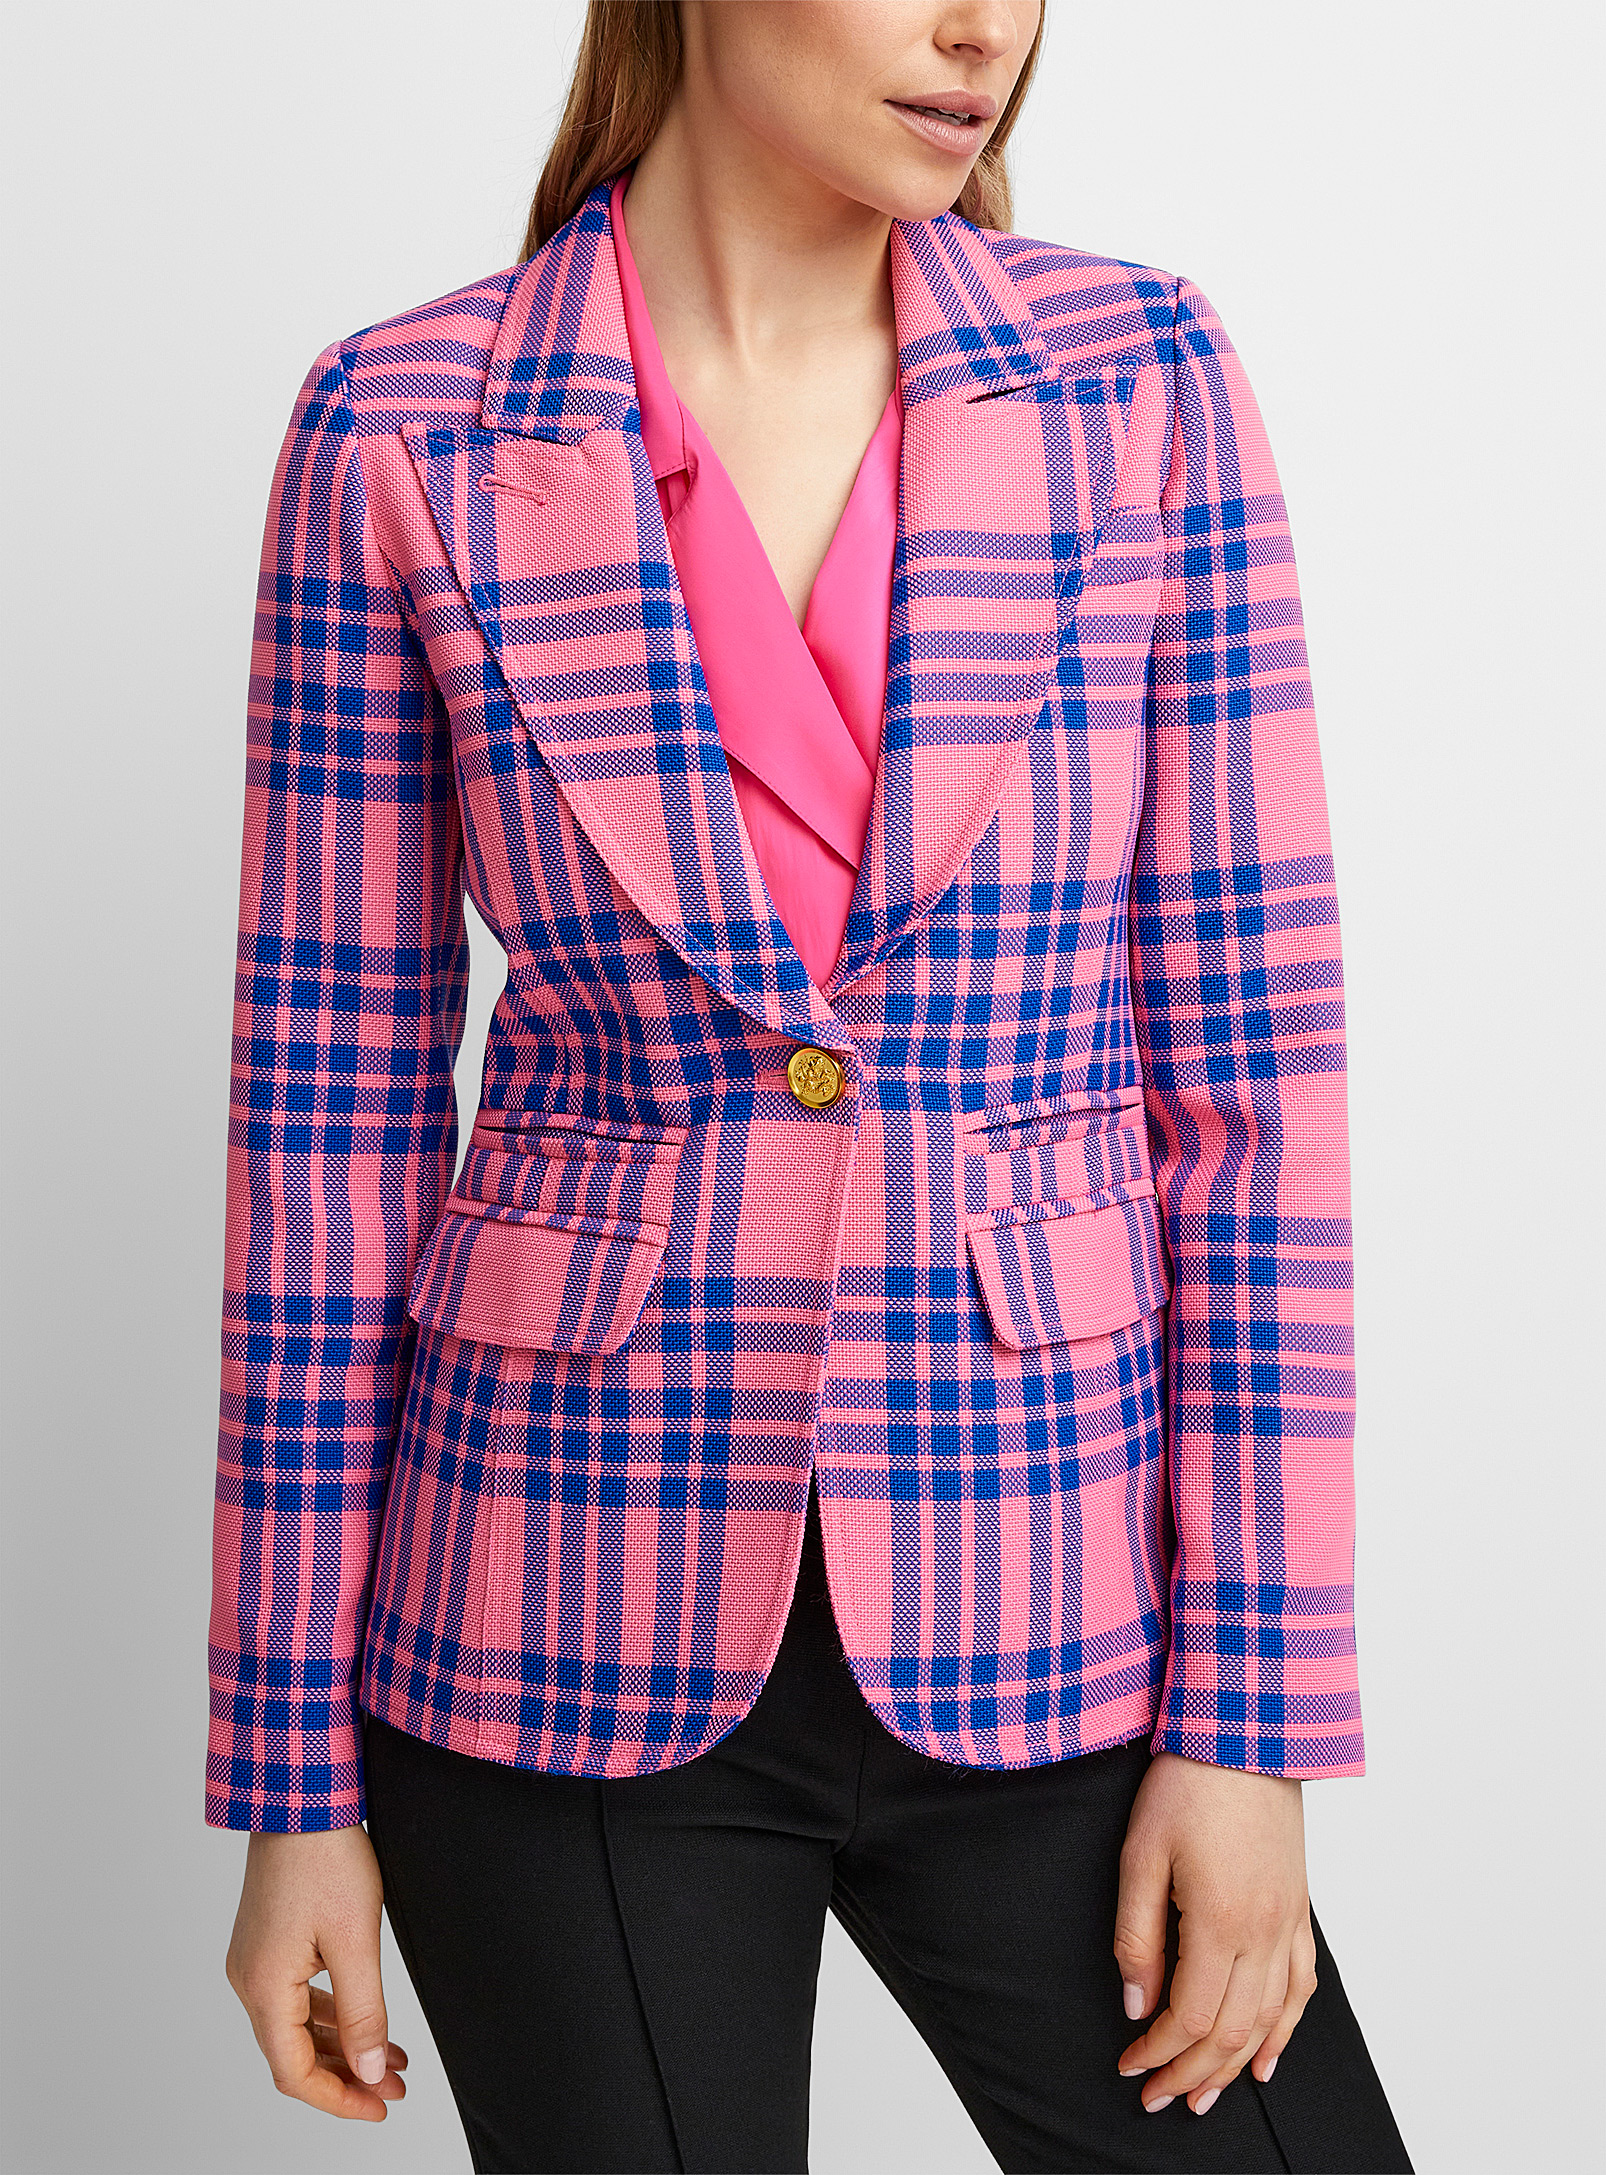 Smythe - Women's Checkered pink Blazer Jacket